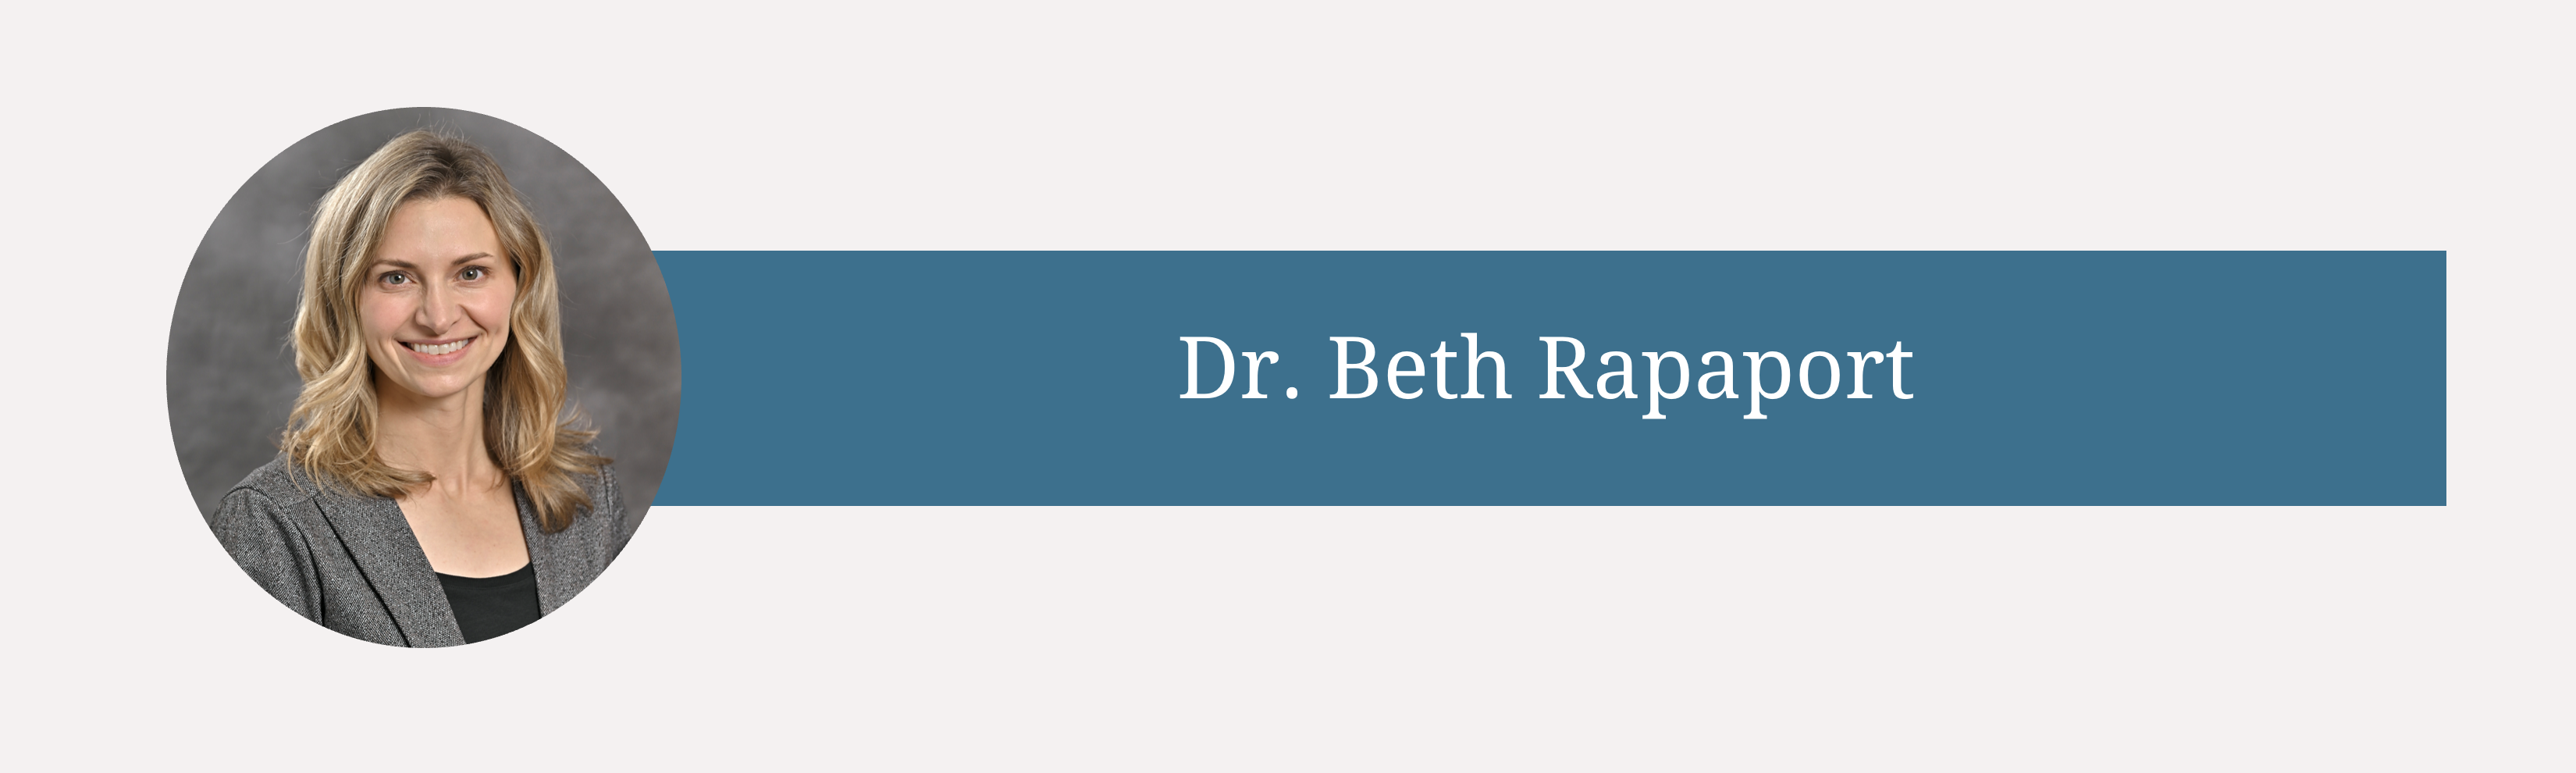 Neurologist Dr. Beth Rapaport Joins Scarsdale Medical Group